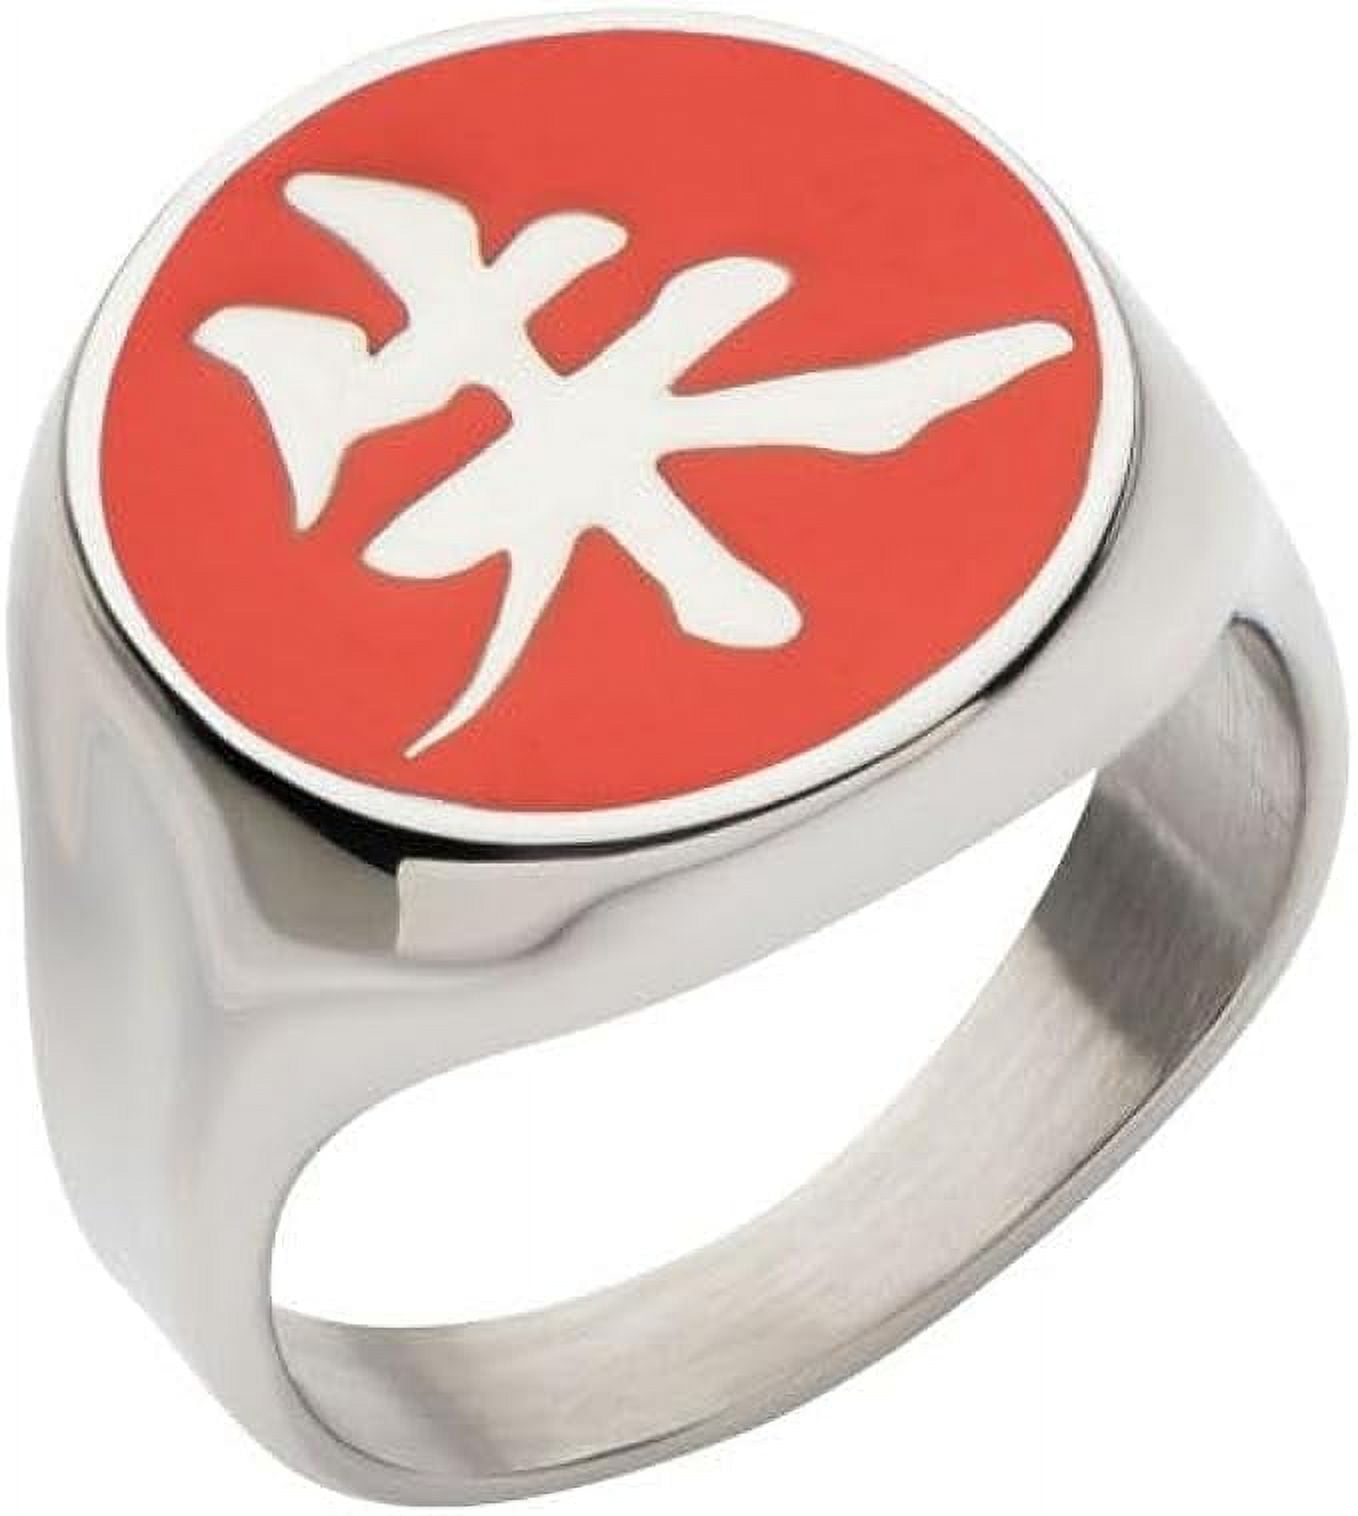 Naruto Akatsuki Itachi Signet Ring Masashi Kishimoto Merchandise Collectible Ring Size 12 e609ccd5 0166 45c3 9c69 5368502beefd.5231dfff8d30503f7e59db4dfd808872